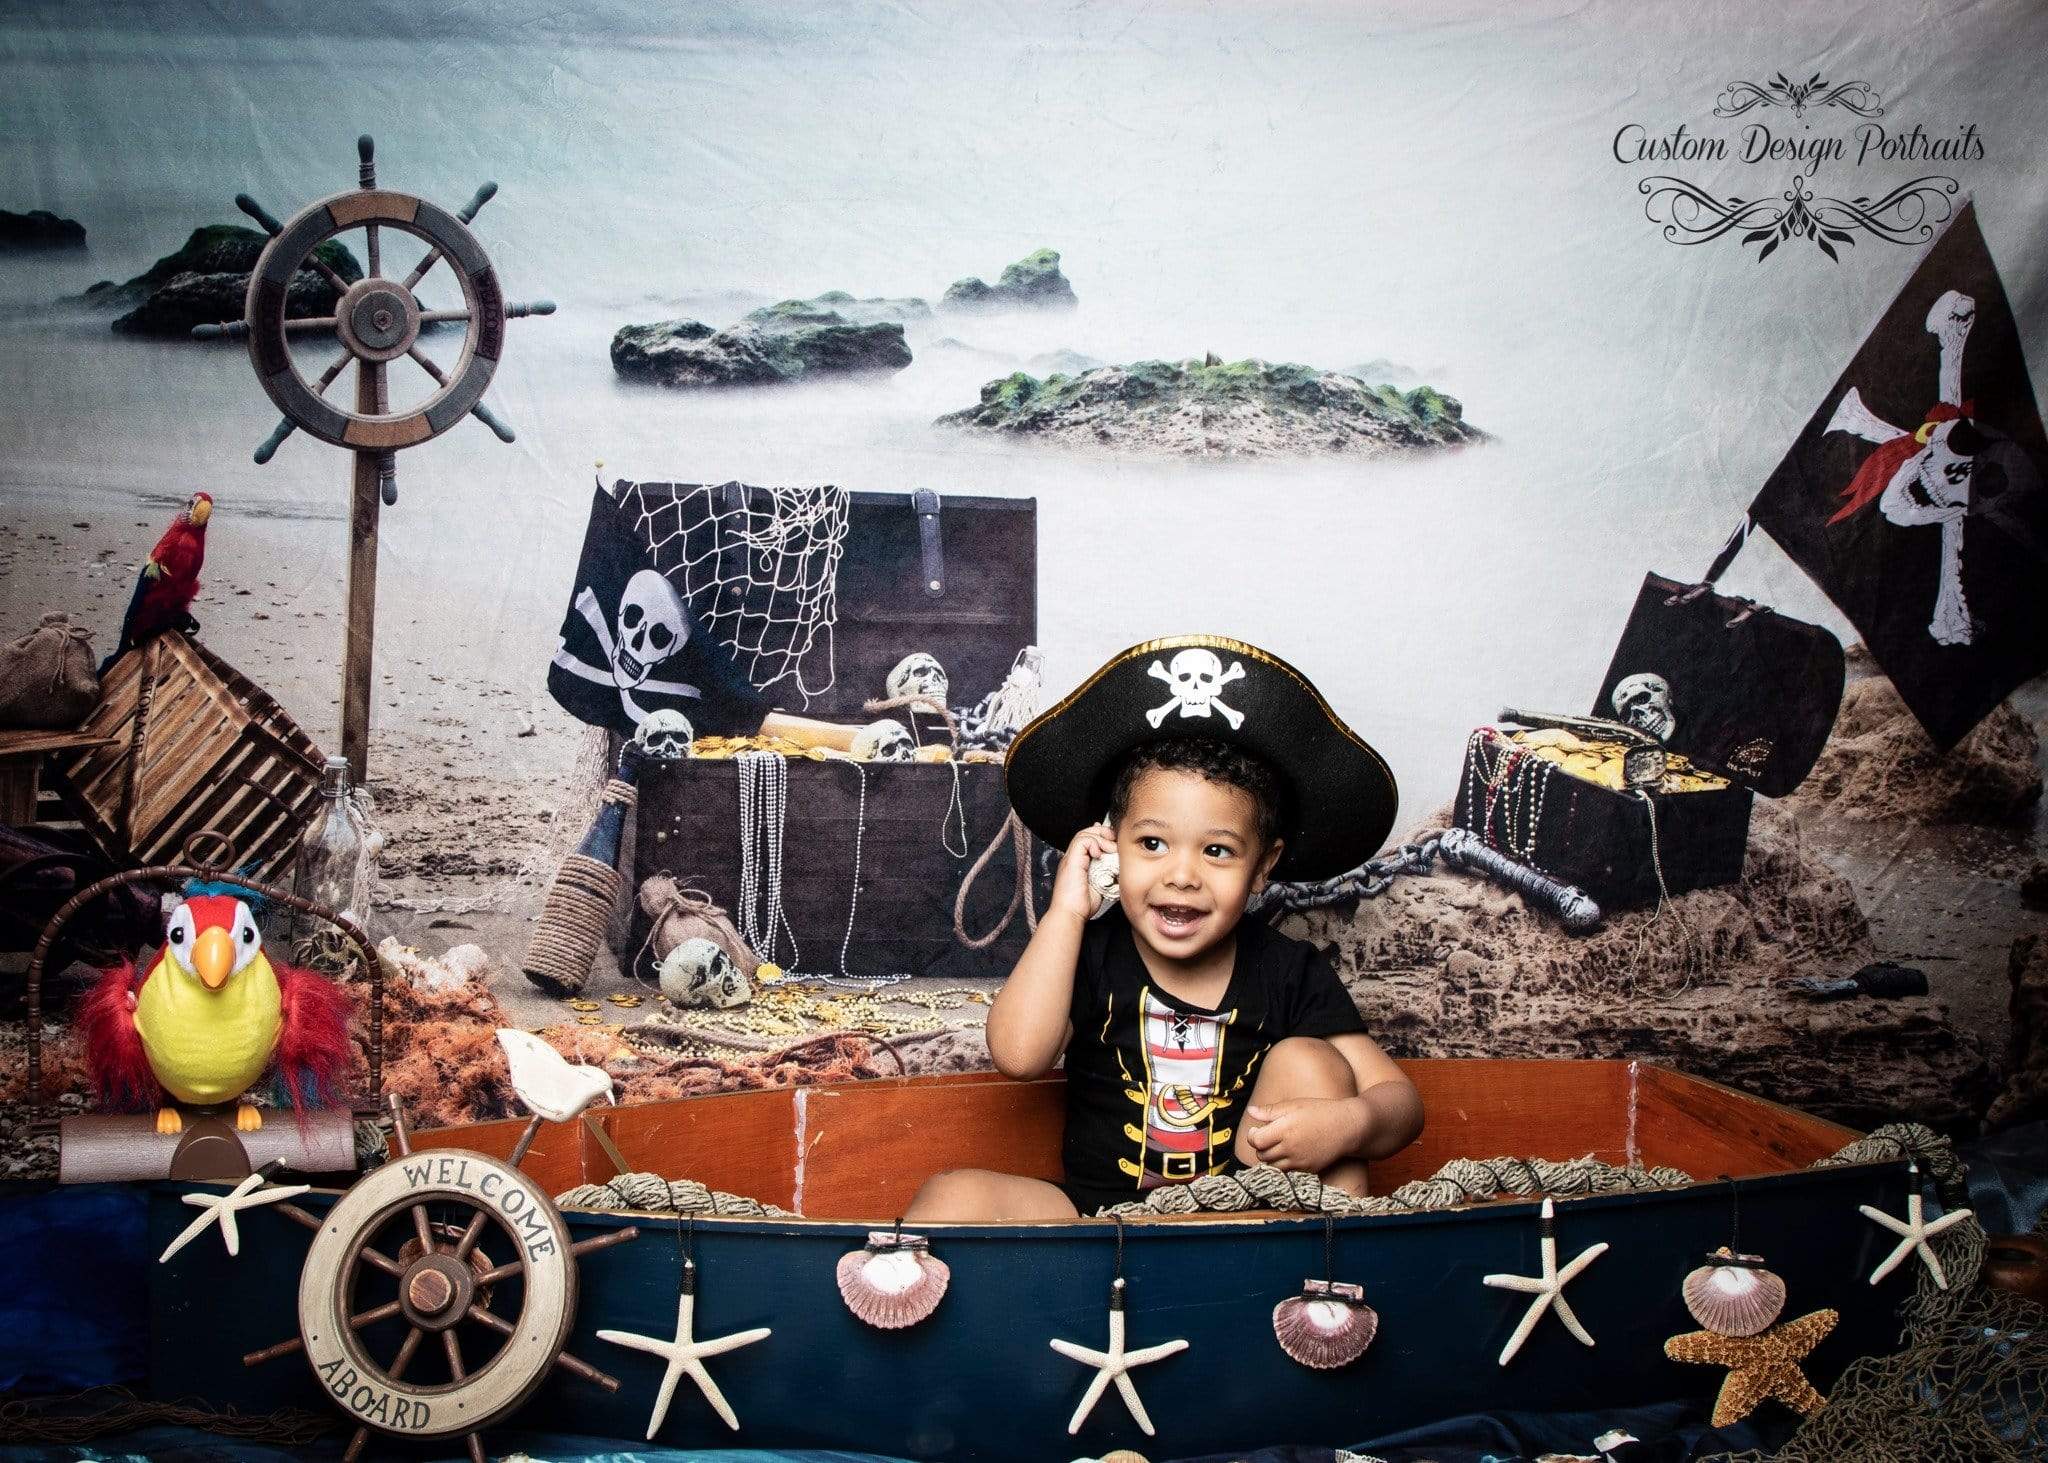 Kate Summer Sea Pirate Backdrop designed by studio gumot